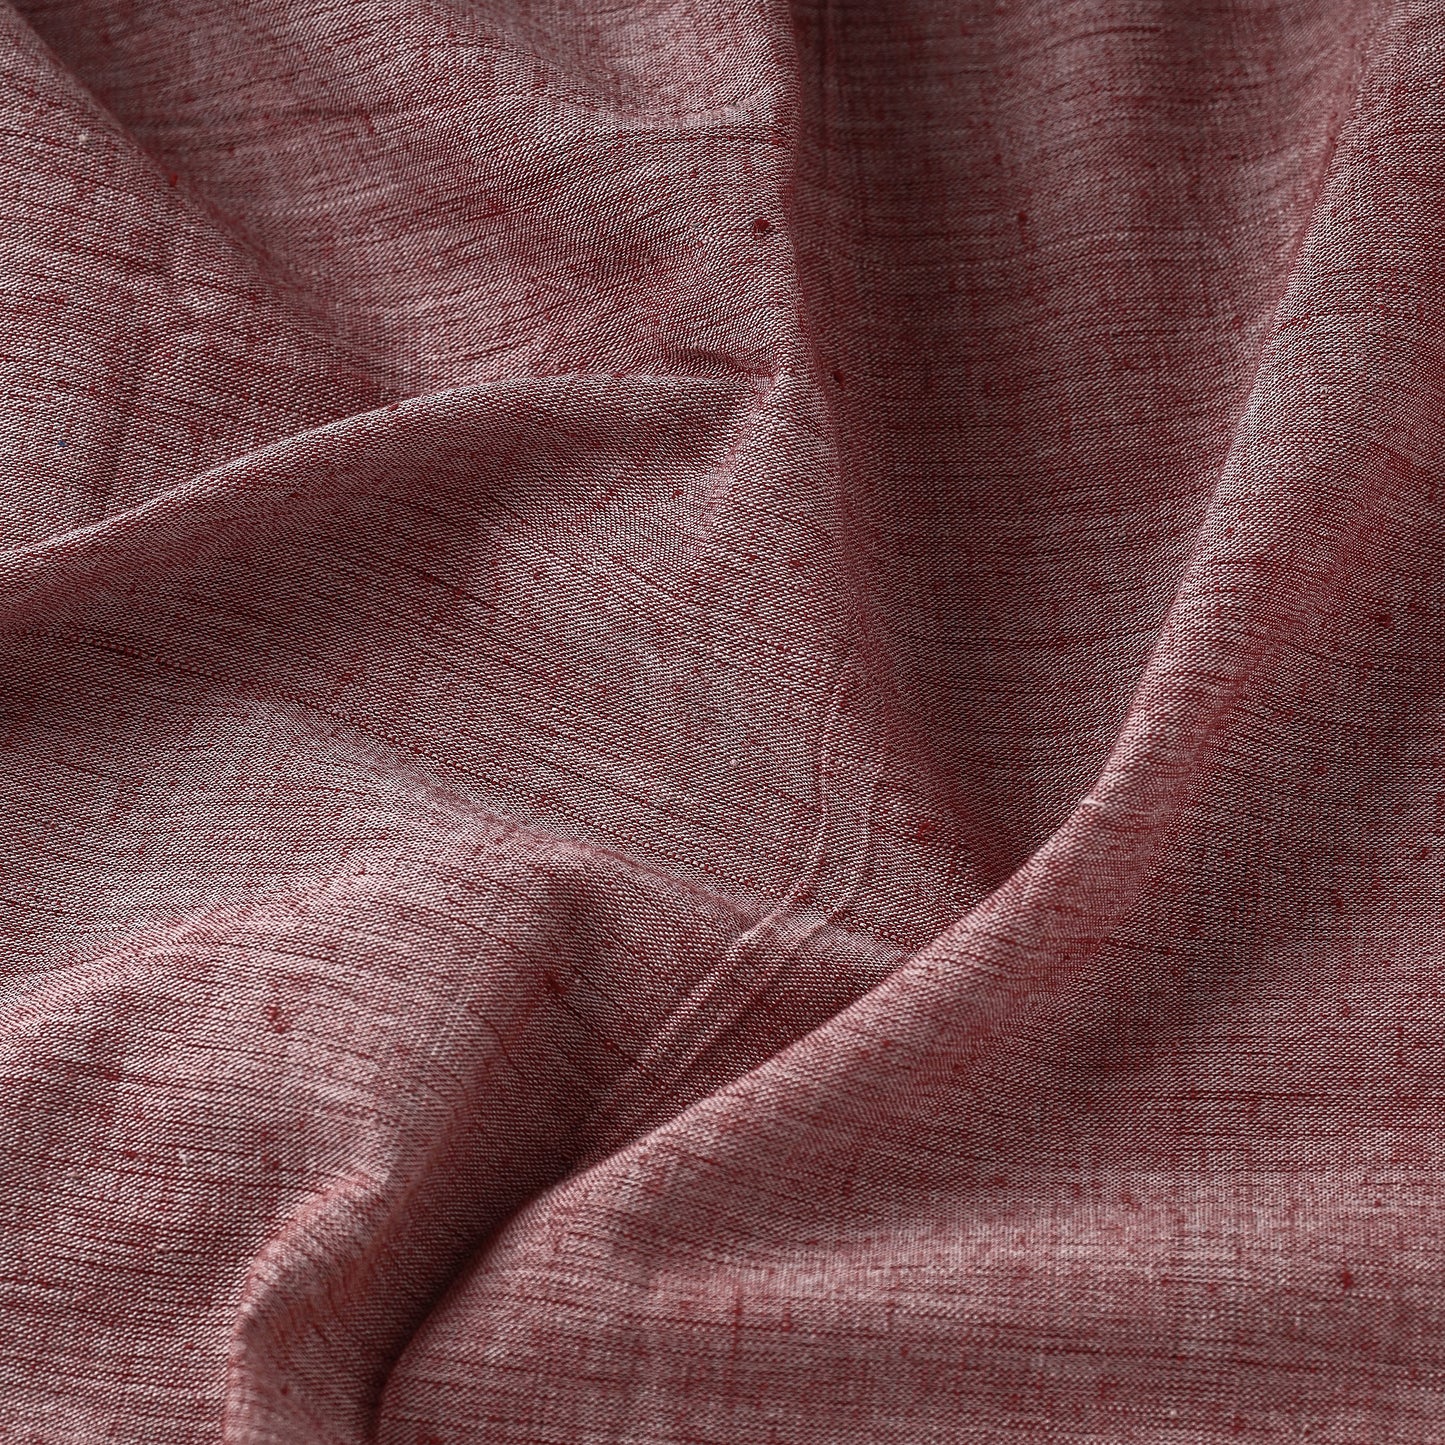 Pink - Kora : Alizarin Red - Malkha Pure Handloom Cotton Natural Dyed Fabric